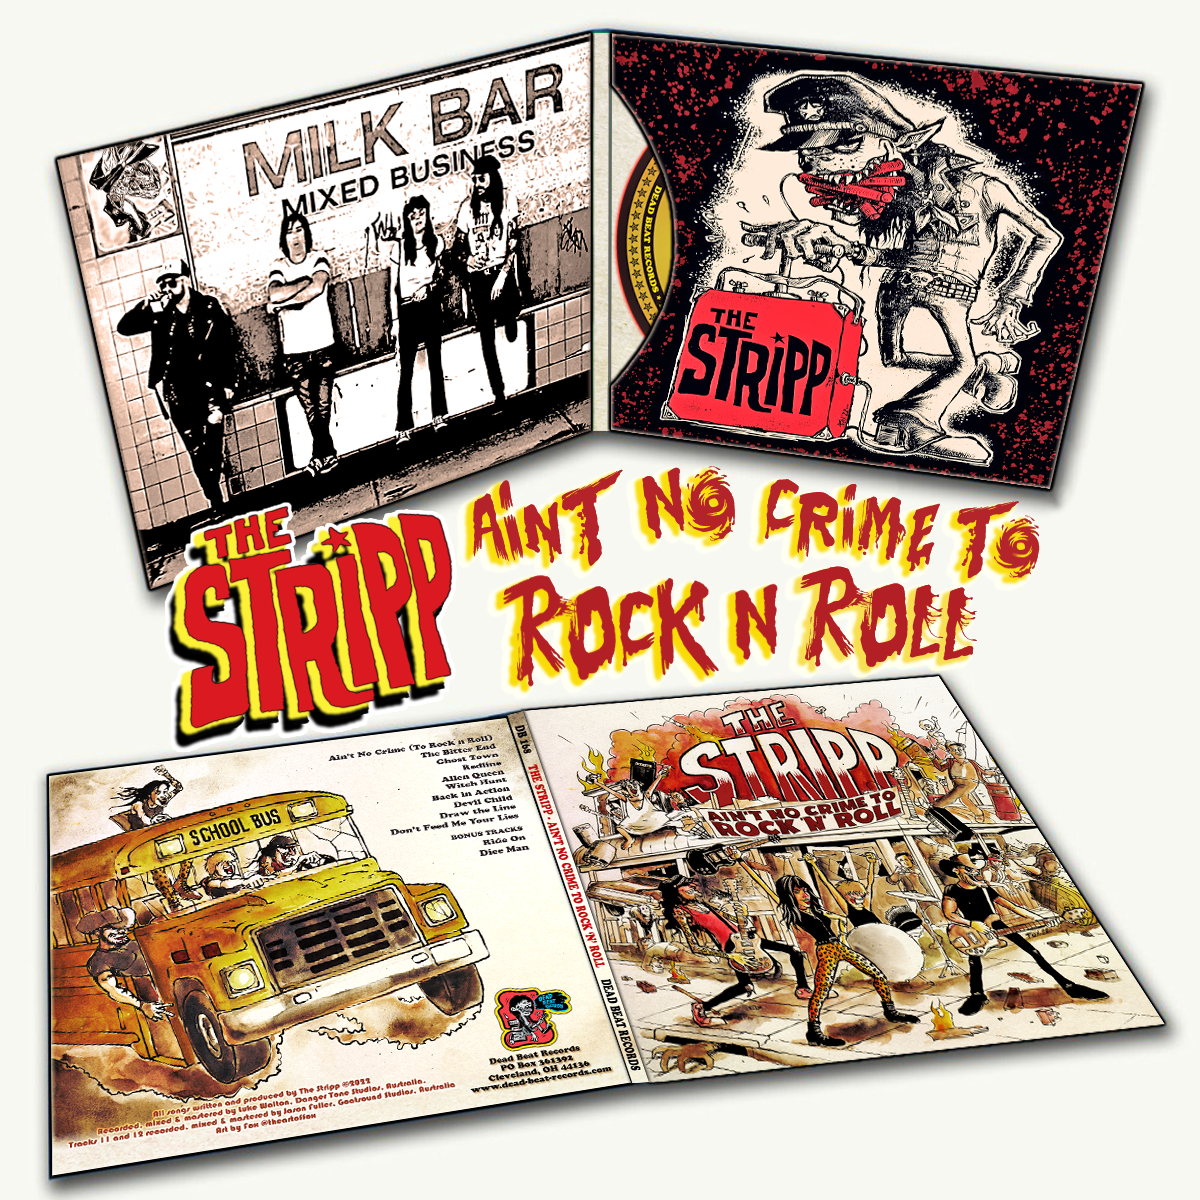 The Stripp- Ain’t No Crime To Rock ‘N Roll CD ~WITH 2 BONUS TRACKS!